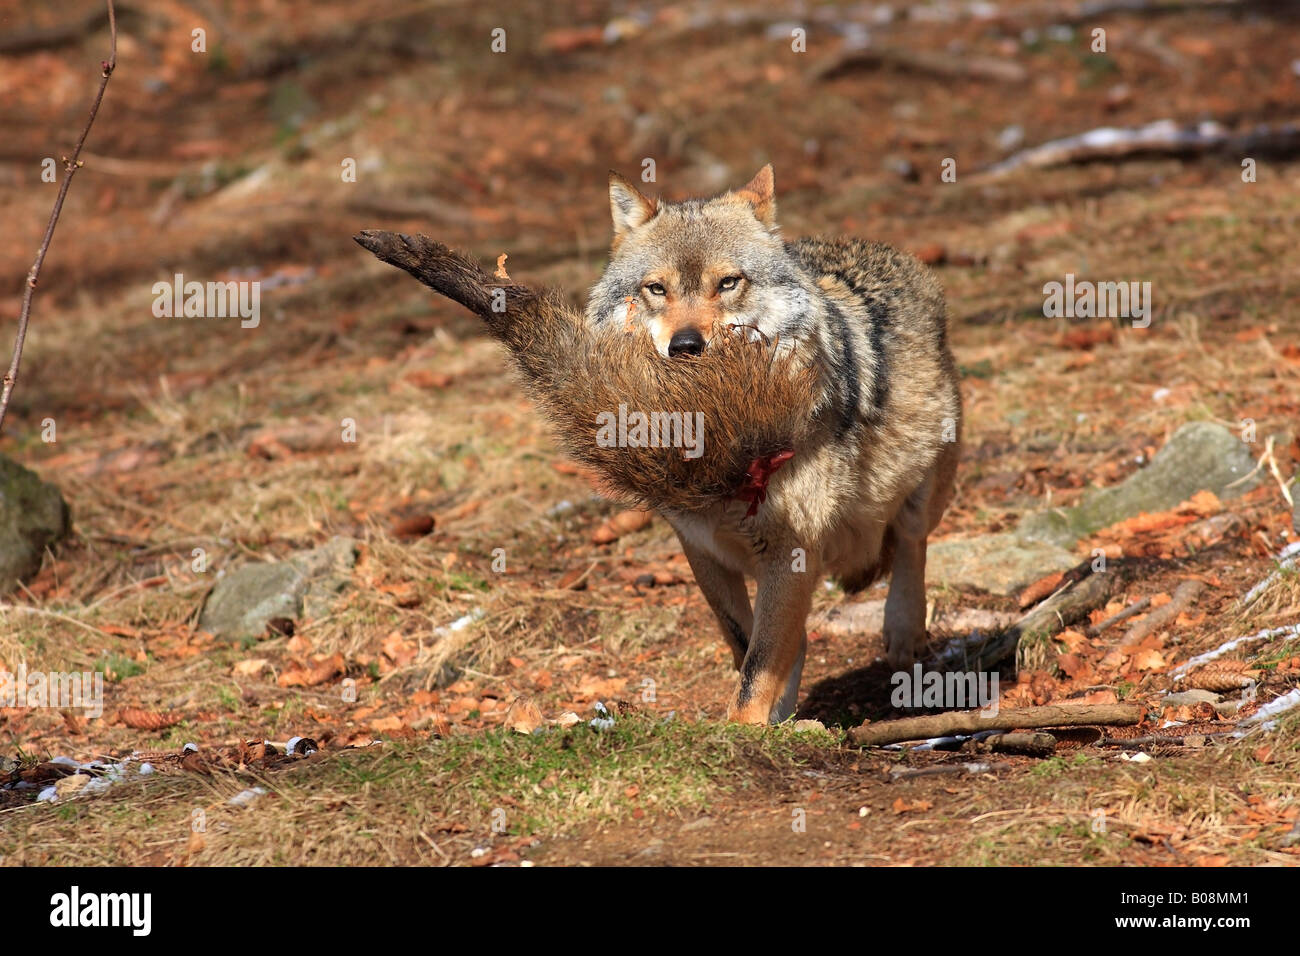 Graue Wölfe oder Timber Wolf (Canis Lupus) Beute im Maul halten Stockfoto